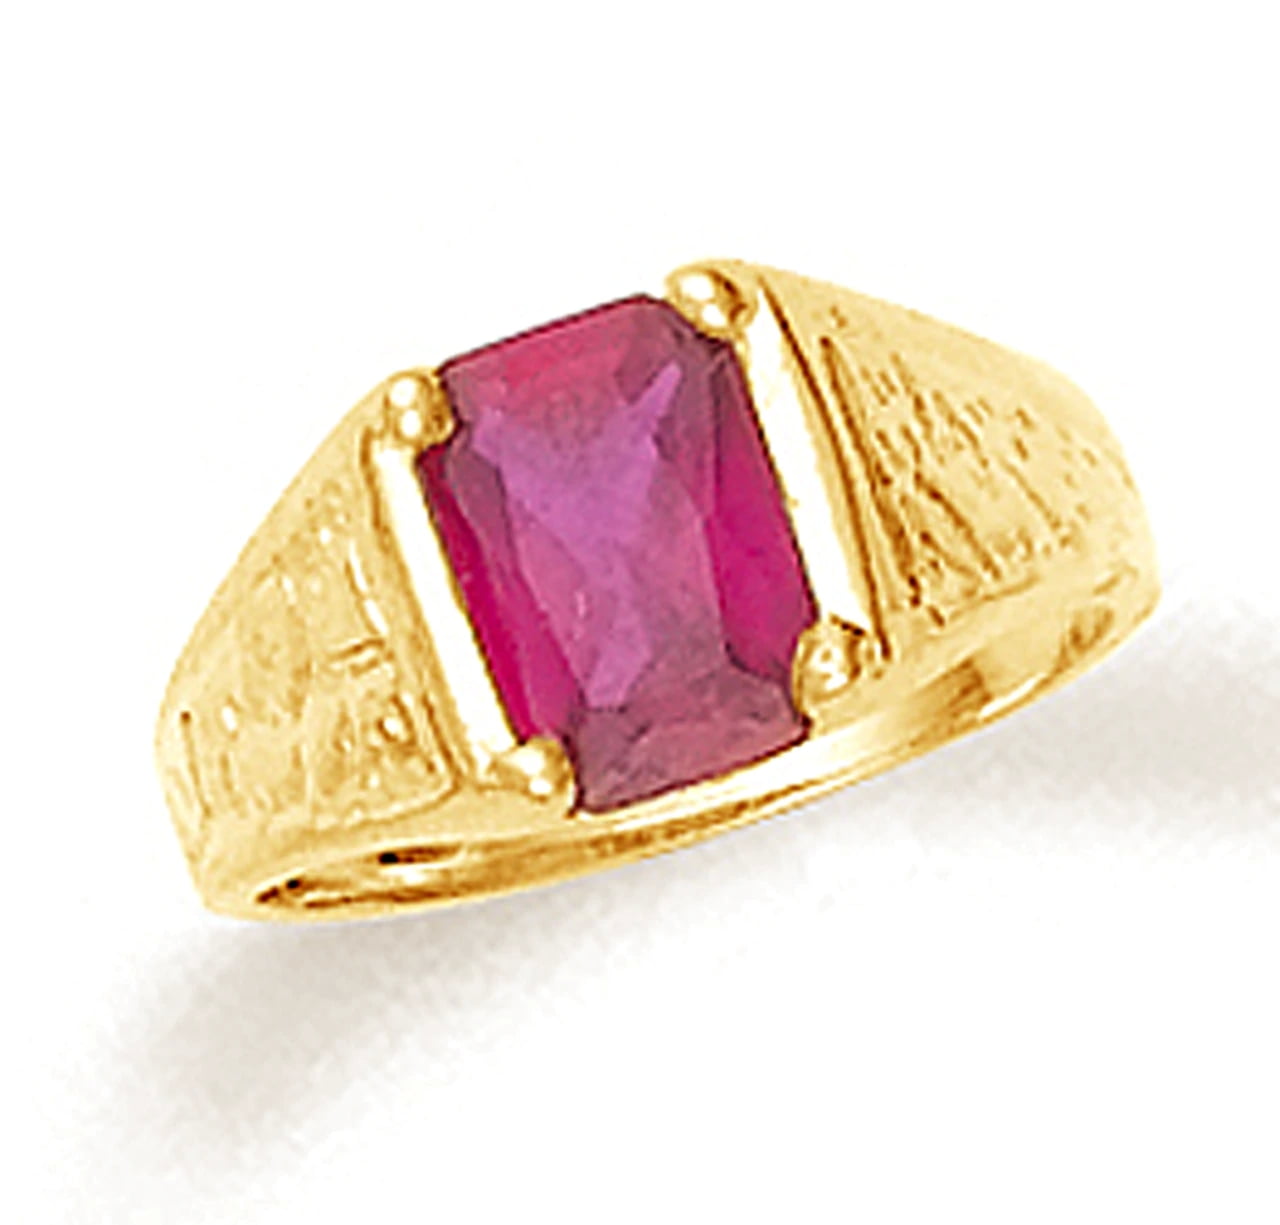 Buy GemsMart ❤️Loving️ Special Day❤️ Real Diamond Ring For Boys Hira Ratan  Original Ring For Mens Diamond Ring Gold Stunning असली हीरा की अंगूठी  Amazing Clarity VVS1 D Color Diamond Lab Certified